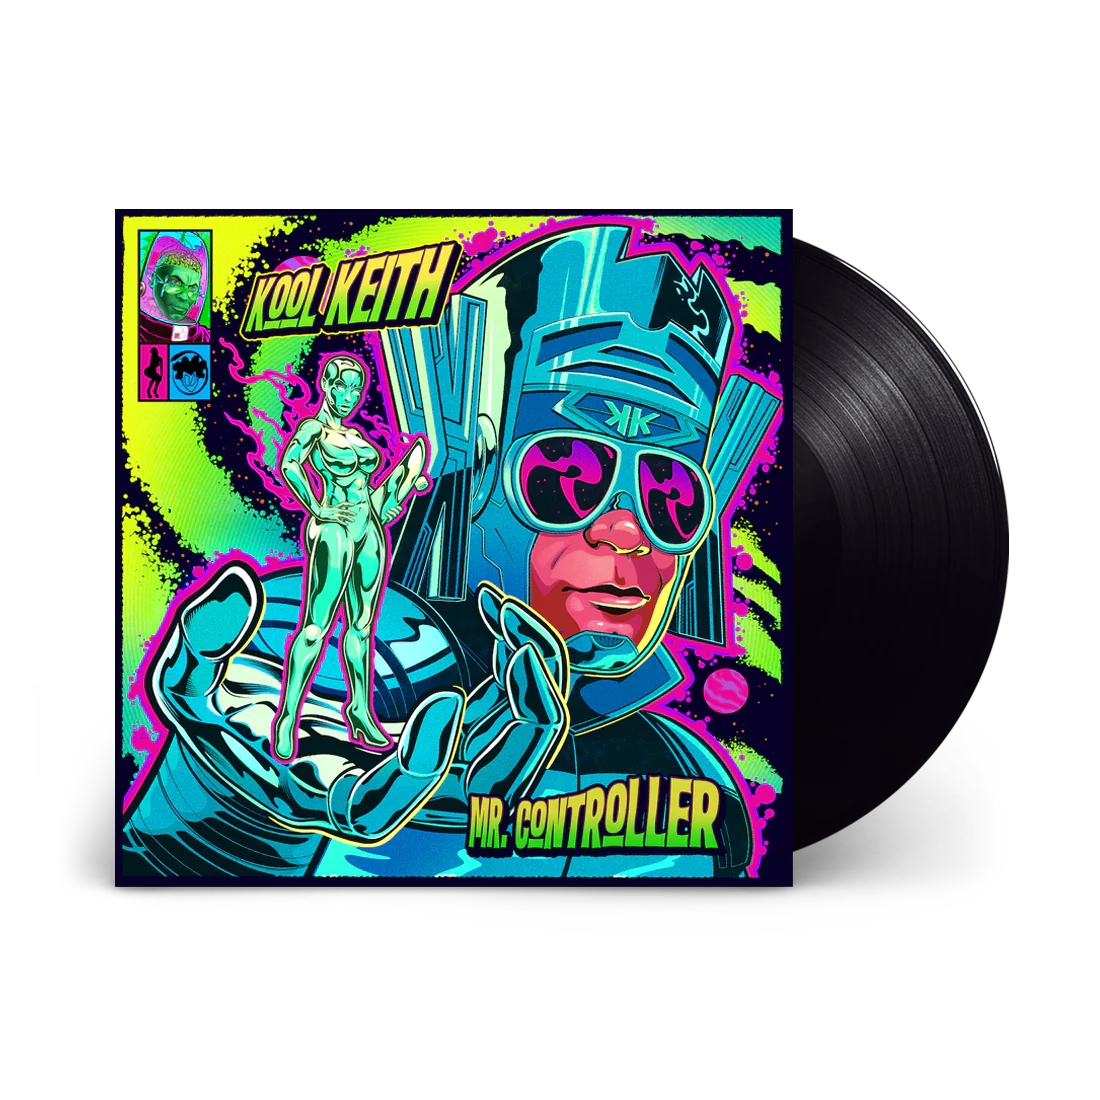 Kool Keith – Mr. Controller LP